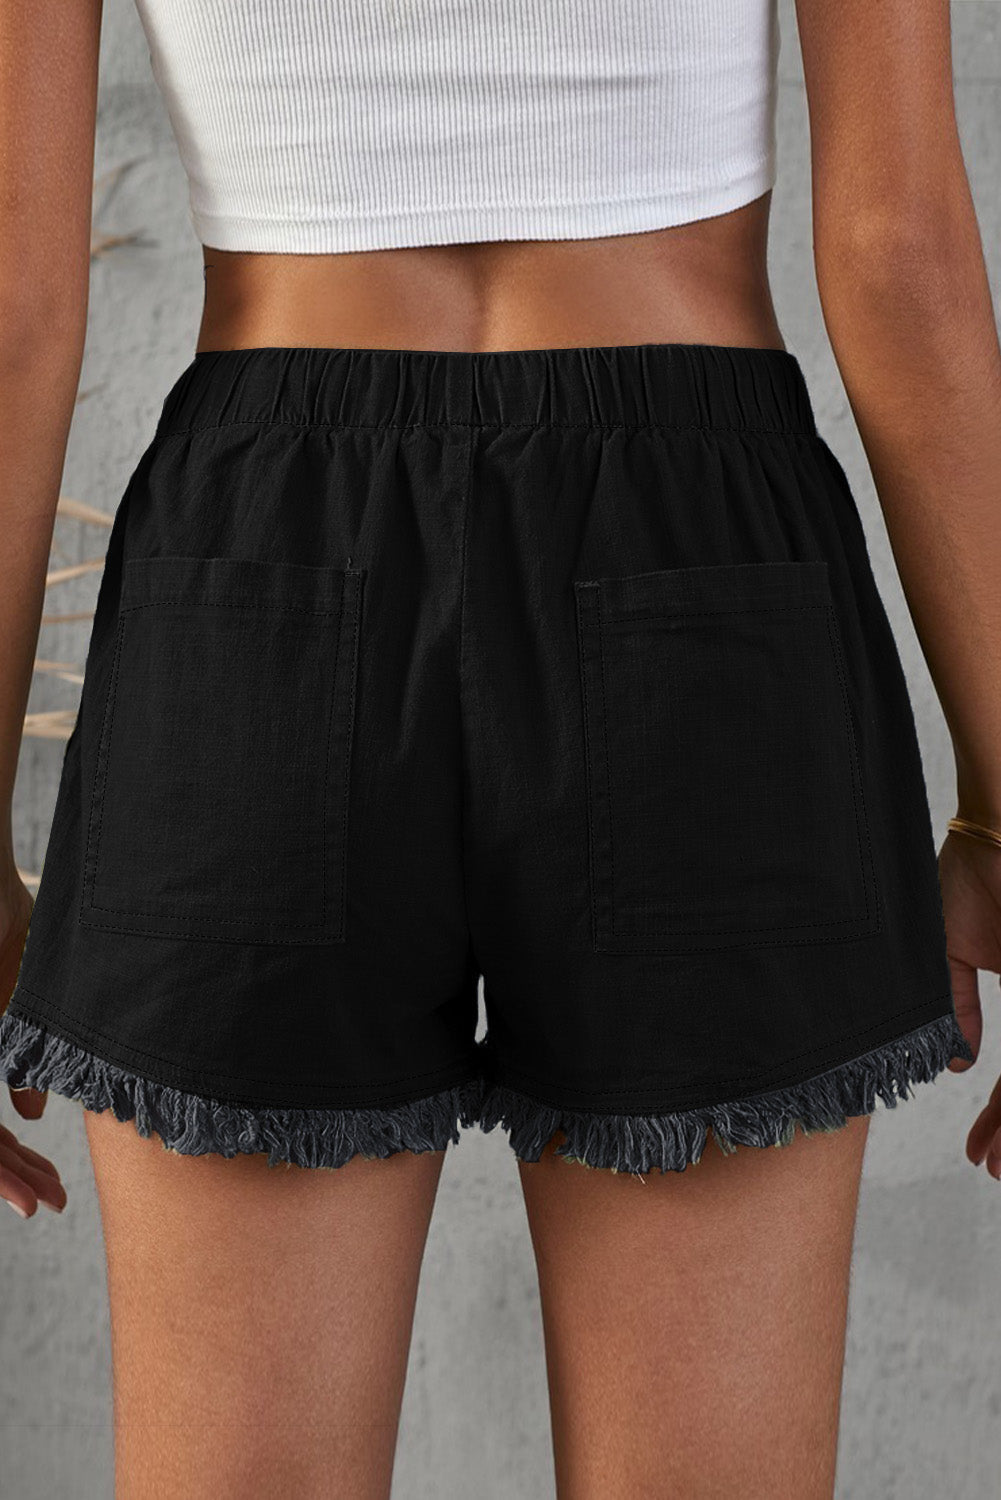 Pocketed Frayed Denim Shorts - fashion